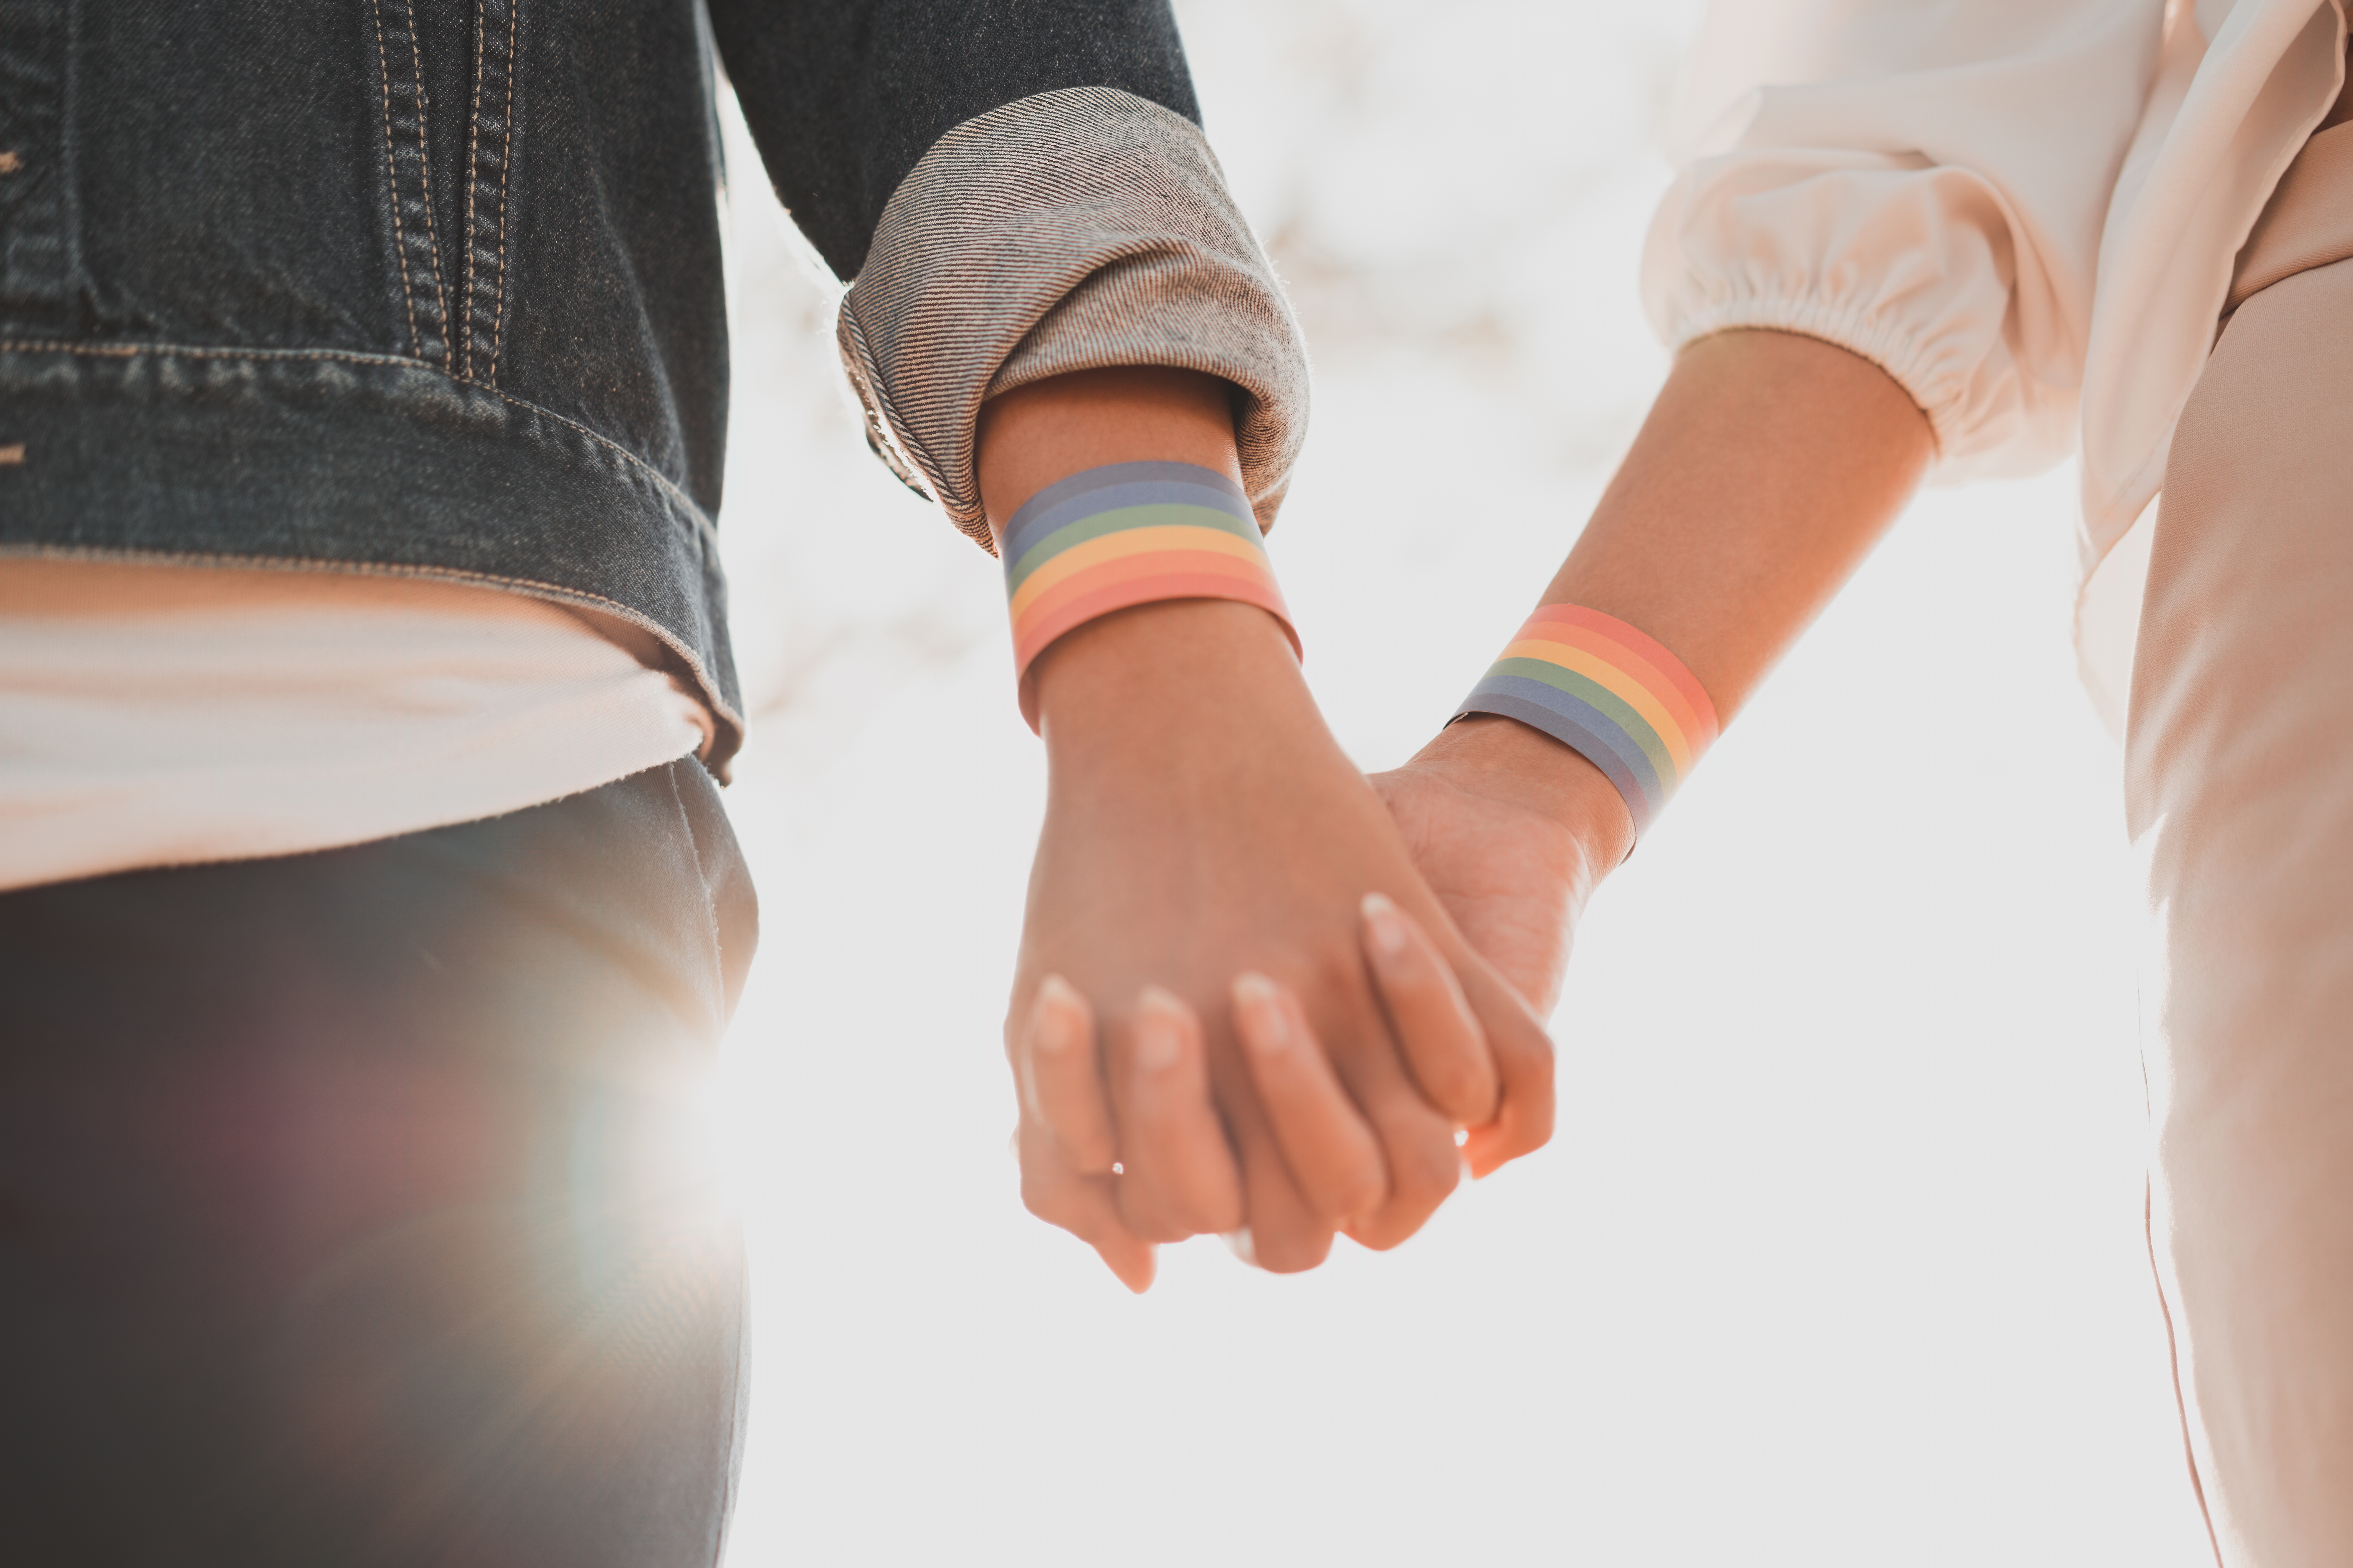 Holding hands with pride bracelets